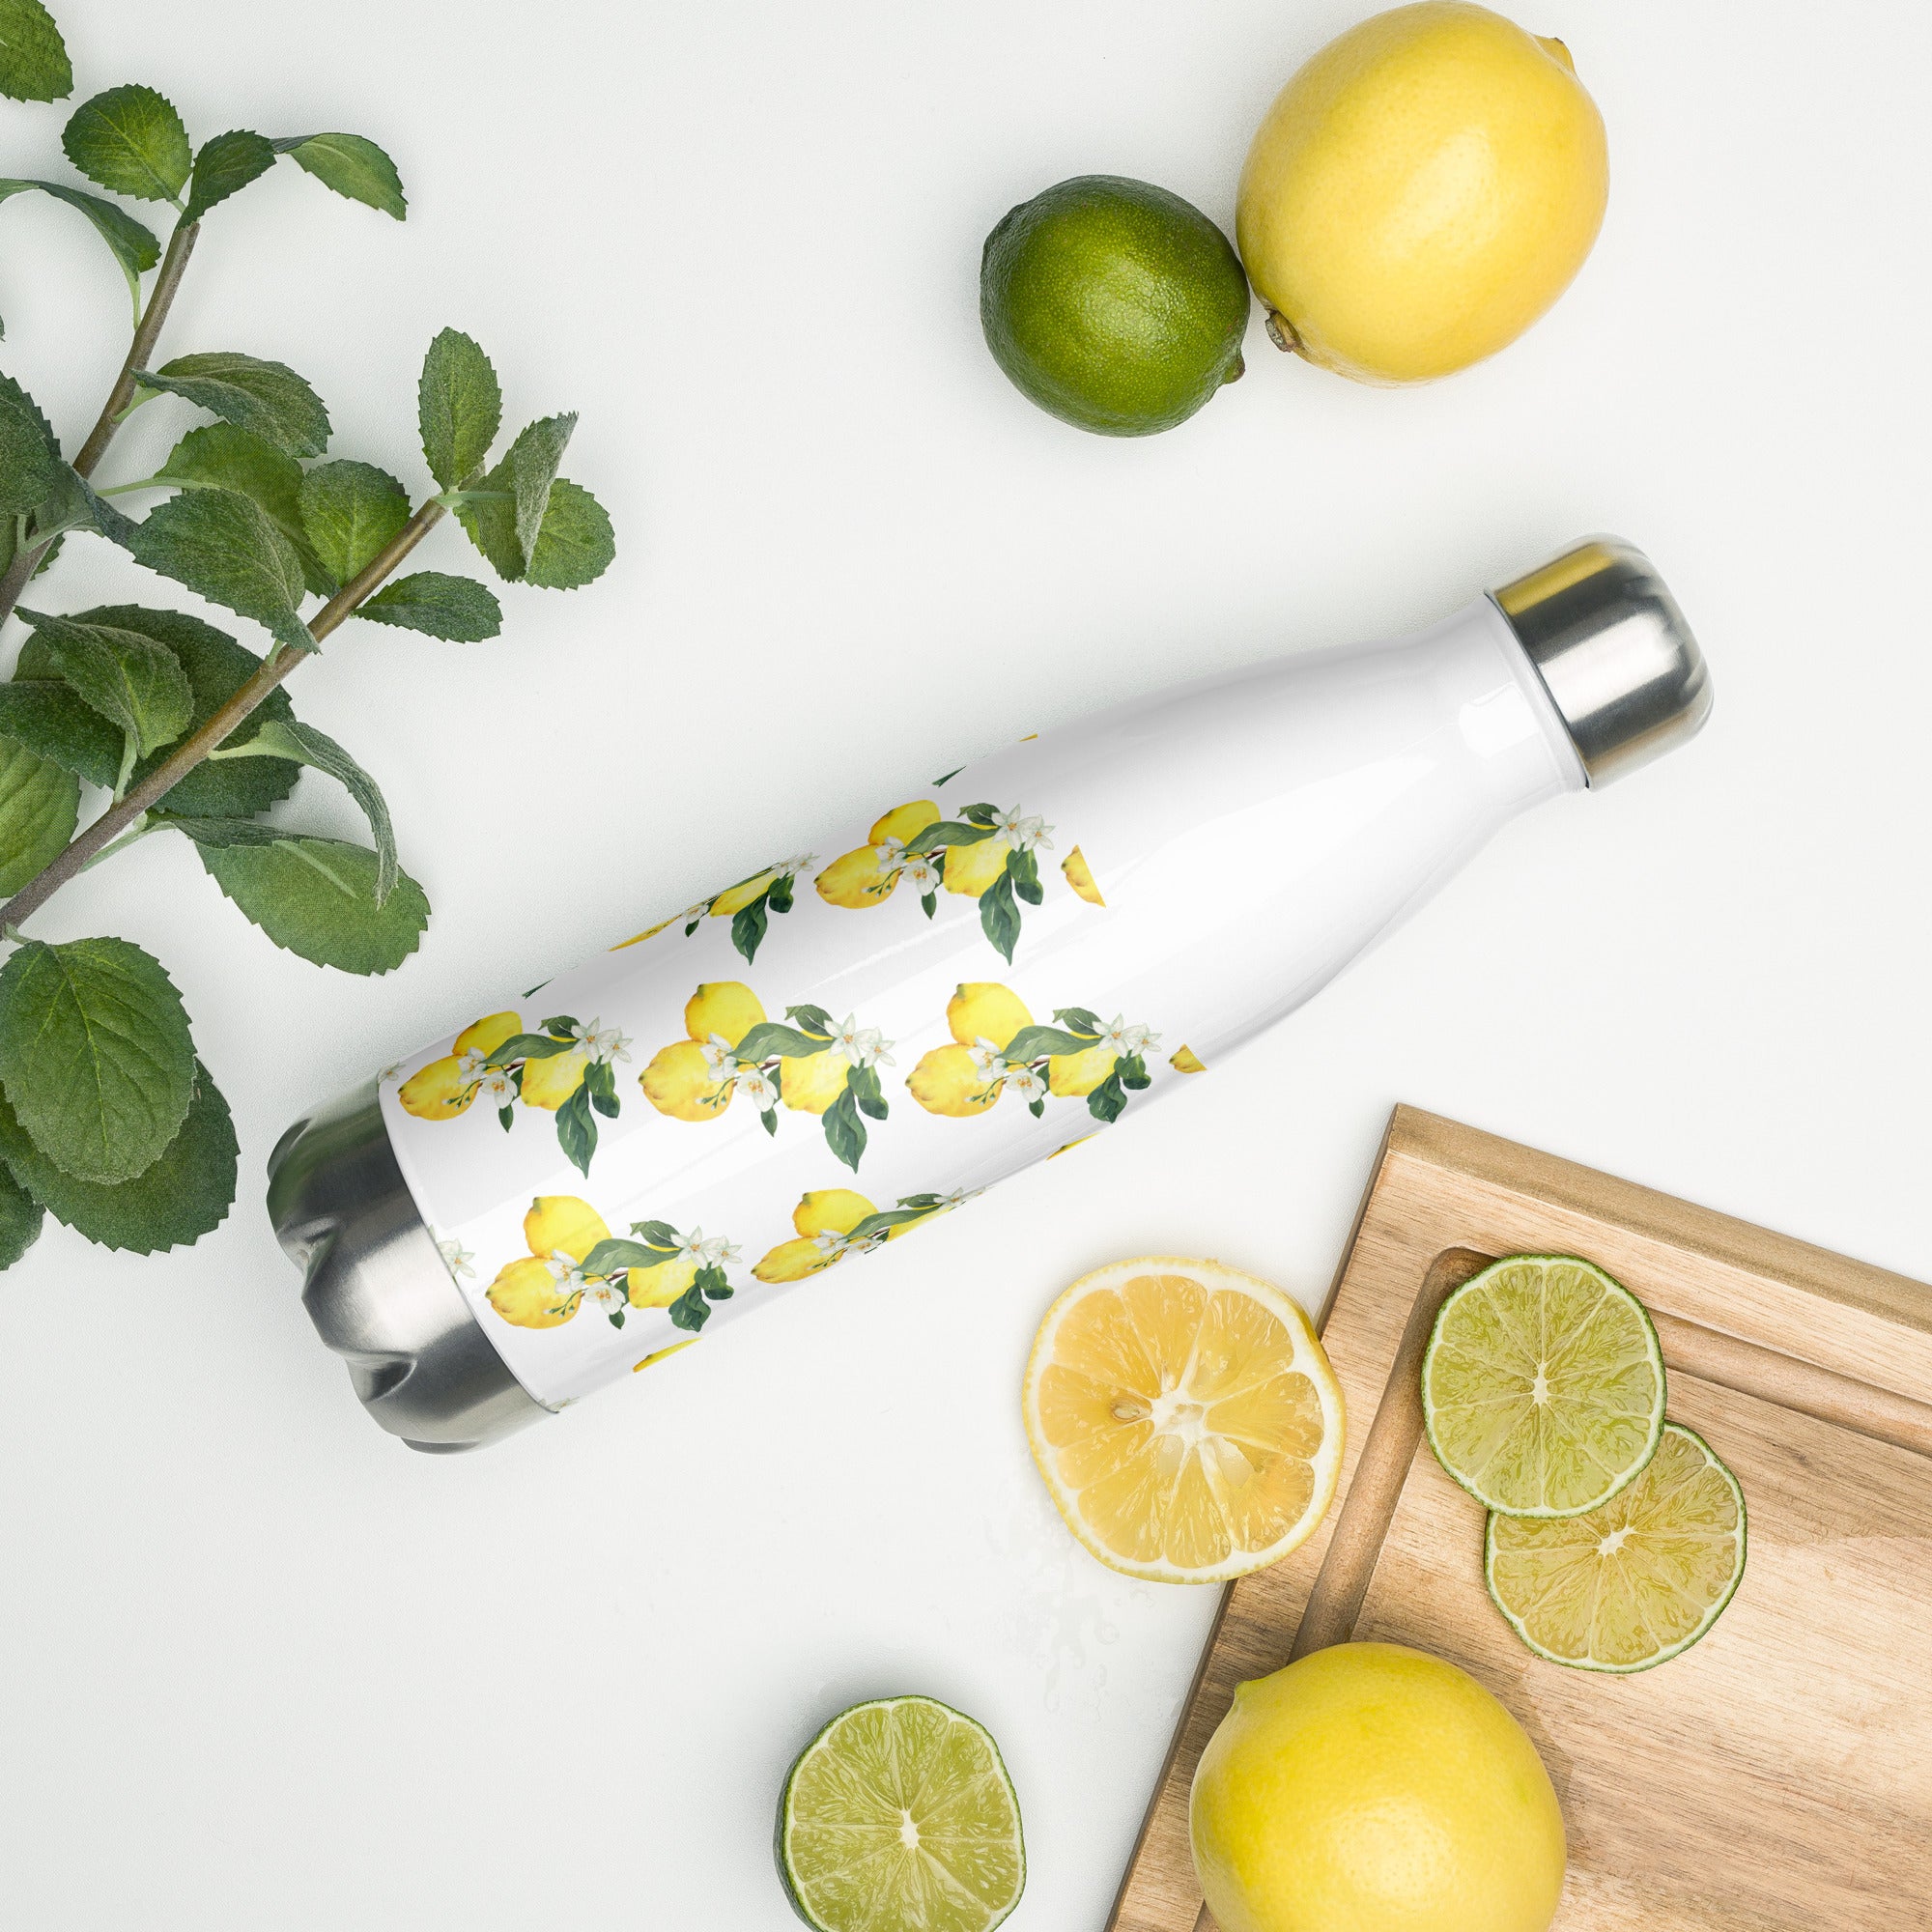 Amalfi Lemons - Stainless Steel Water Bottle